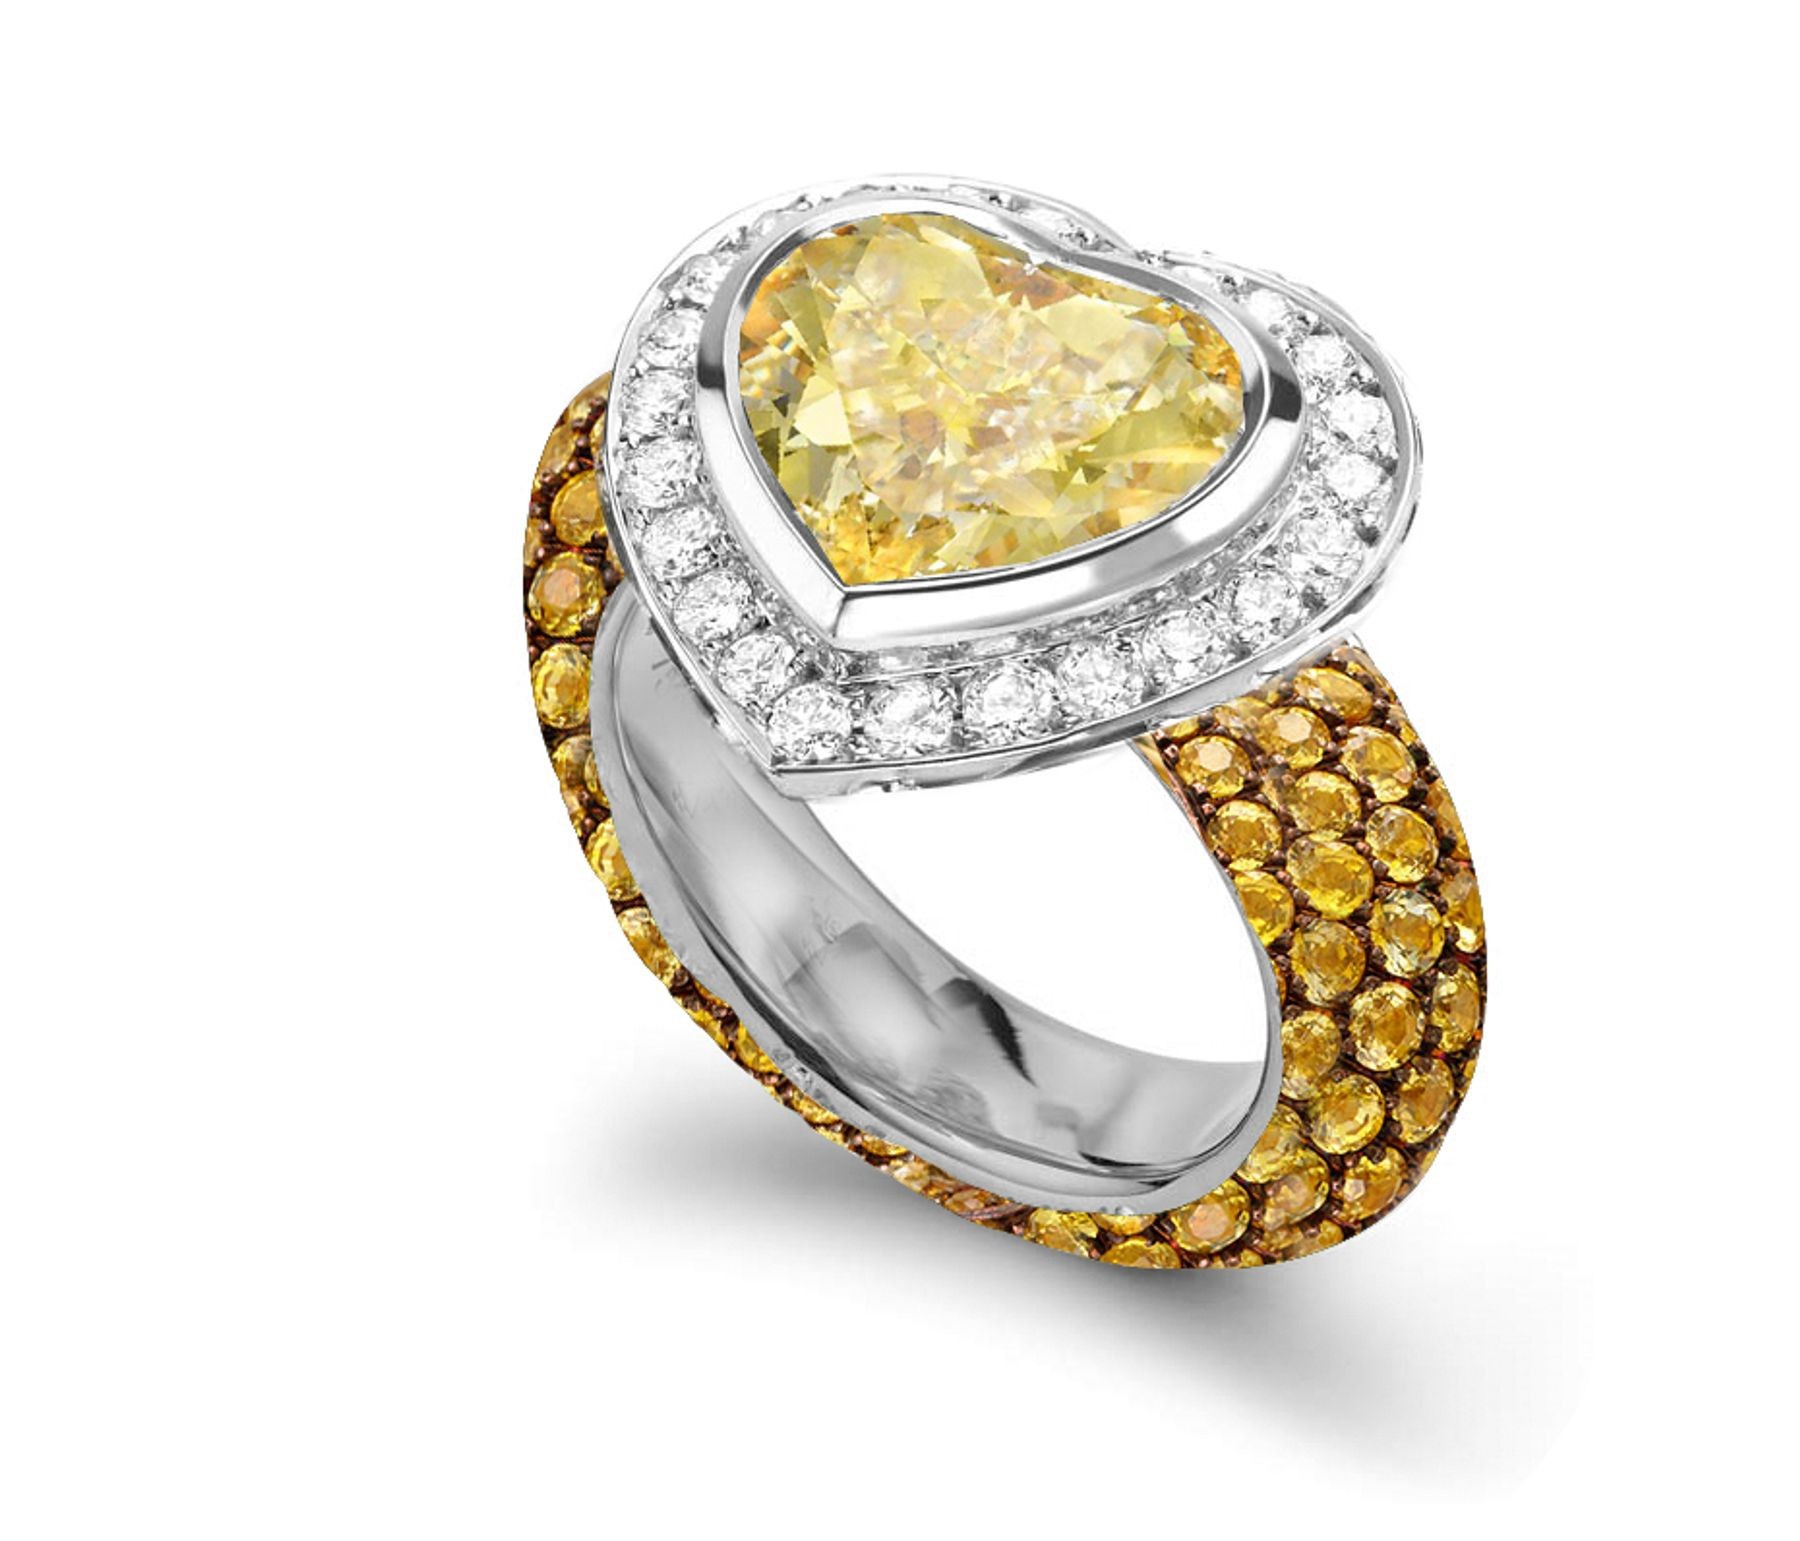 Delicate Micro Pave Round Brilliant Cut & Heart Yellow Sapphires & Diamonds Halo Ring